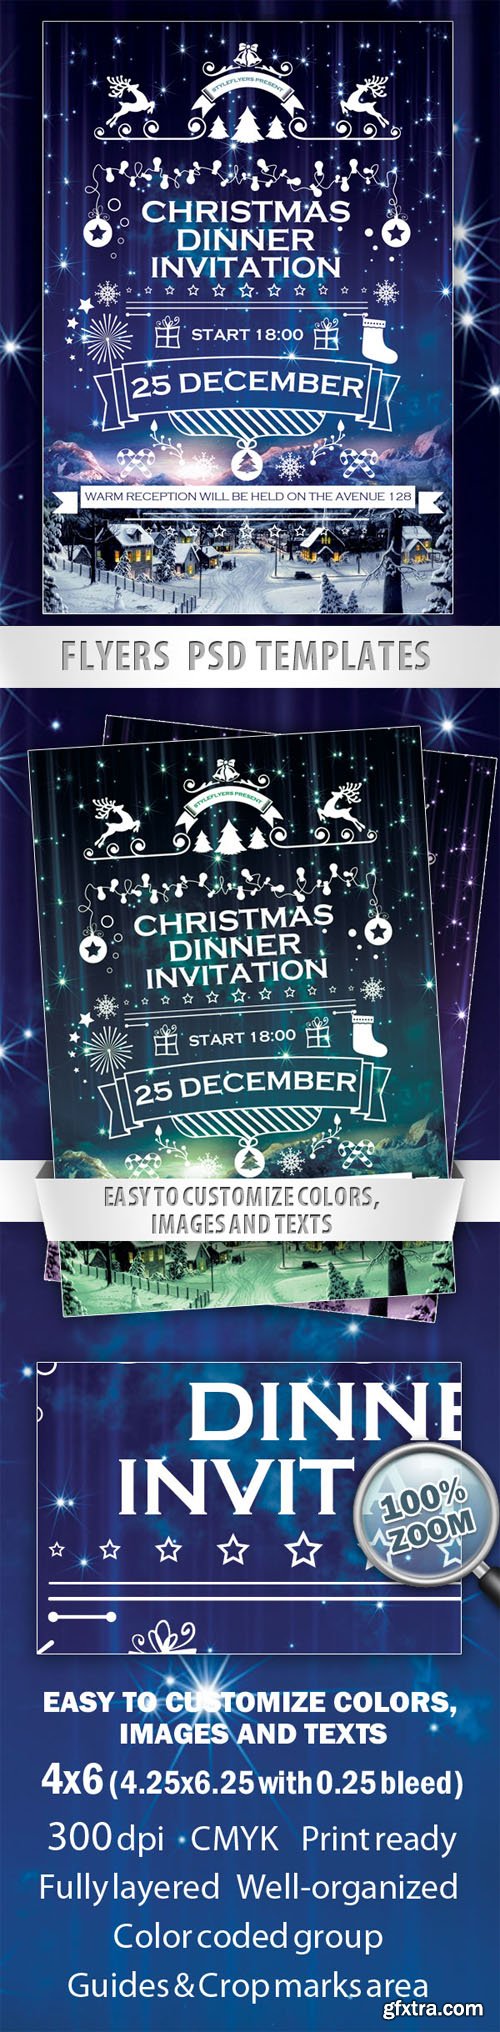 Christmas Dinner Invitation Flyer PSD Templates